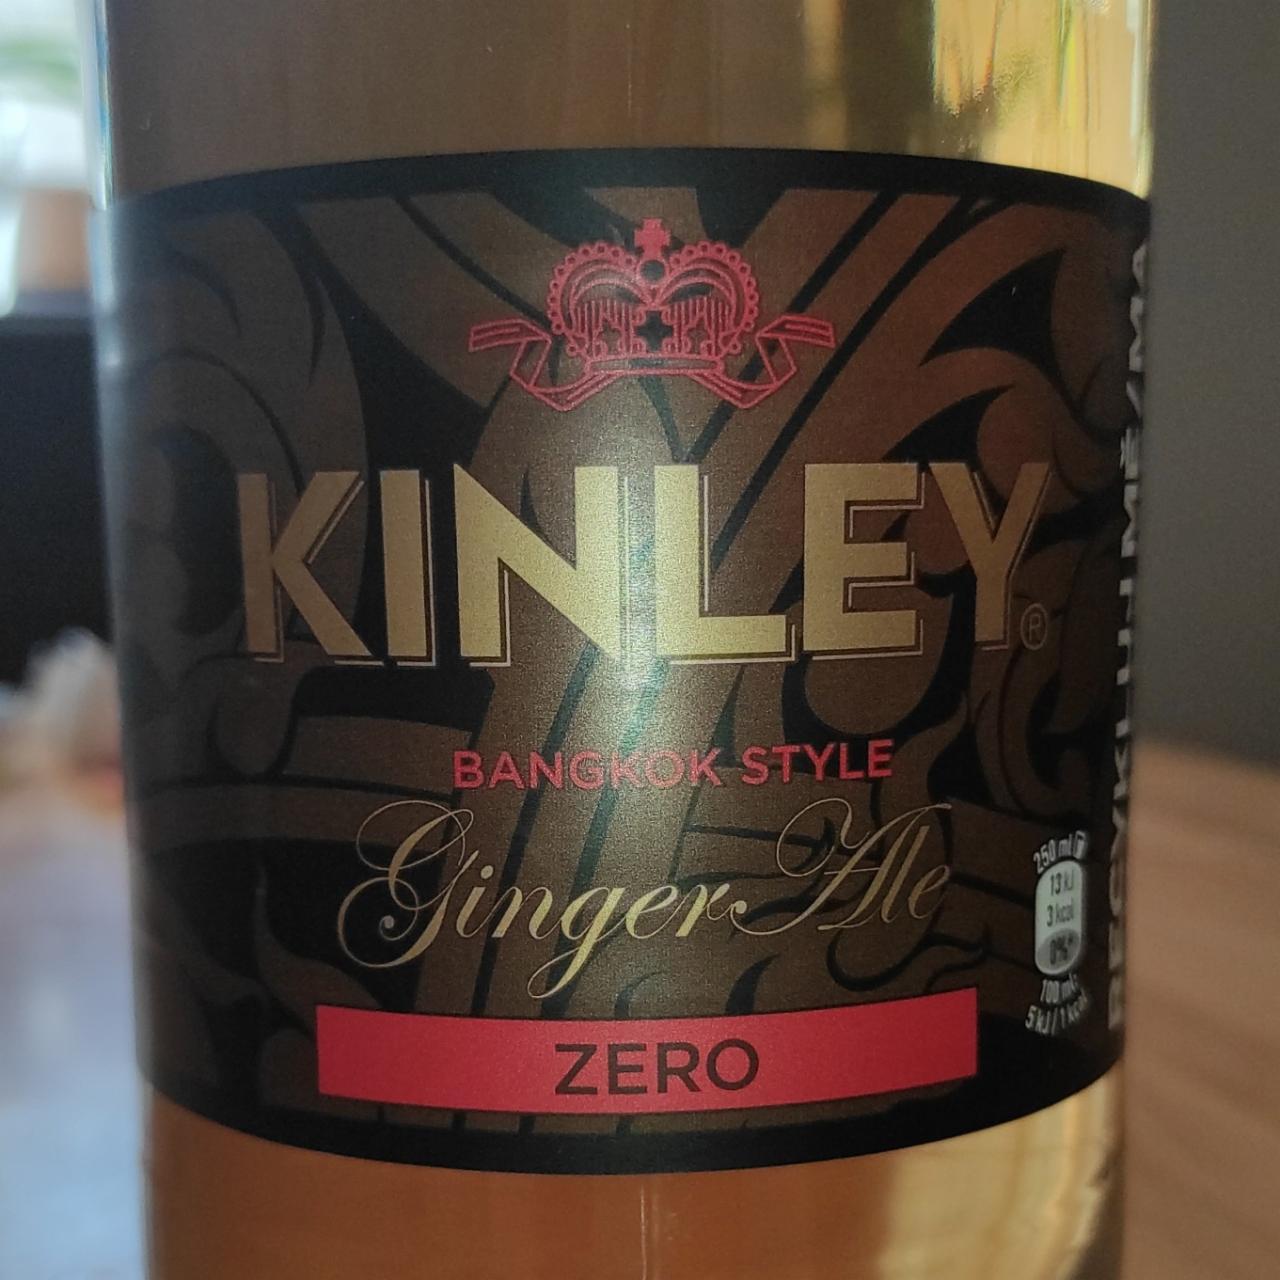 Fotografie - Kinley Bangkok style Ginger Ale Zero